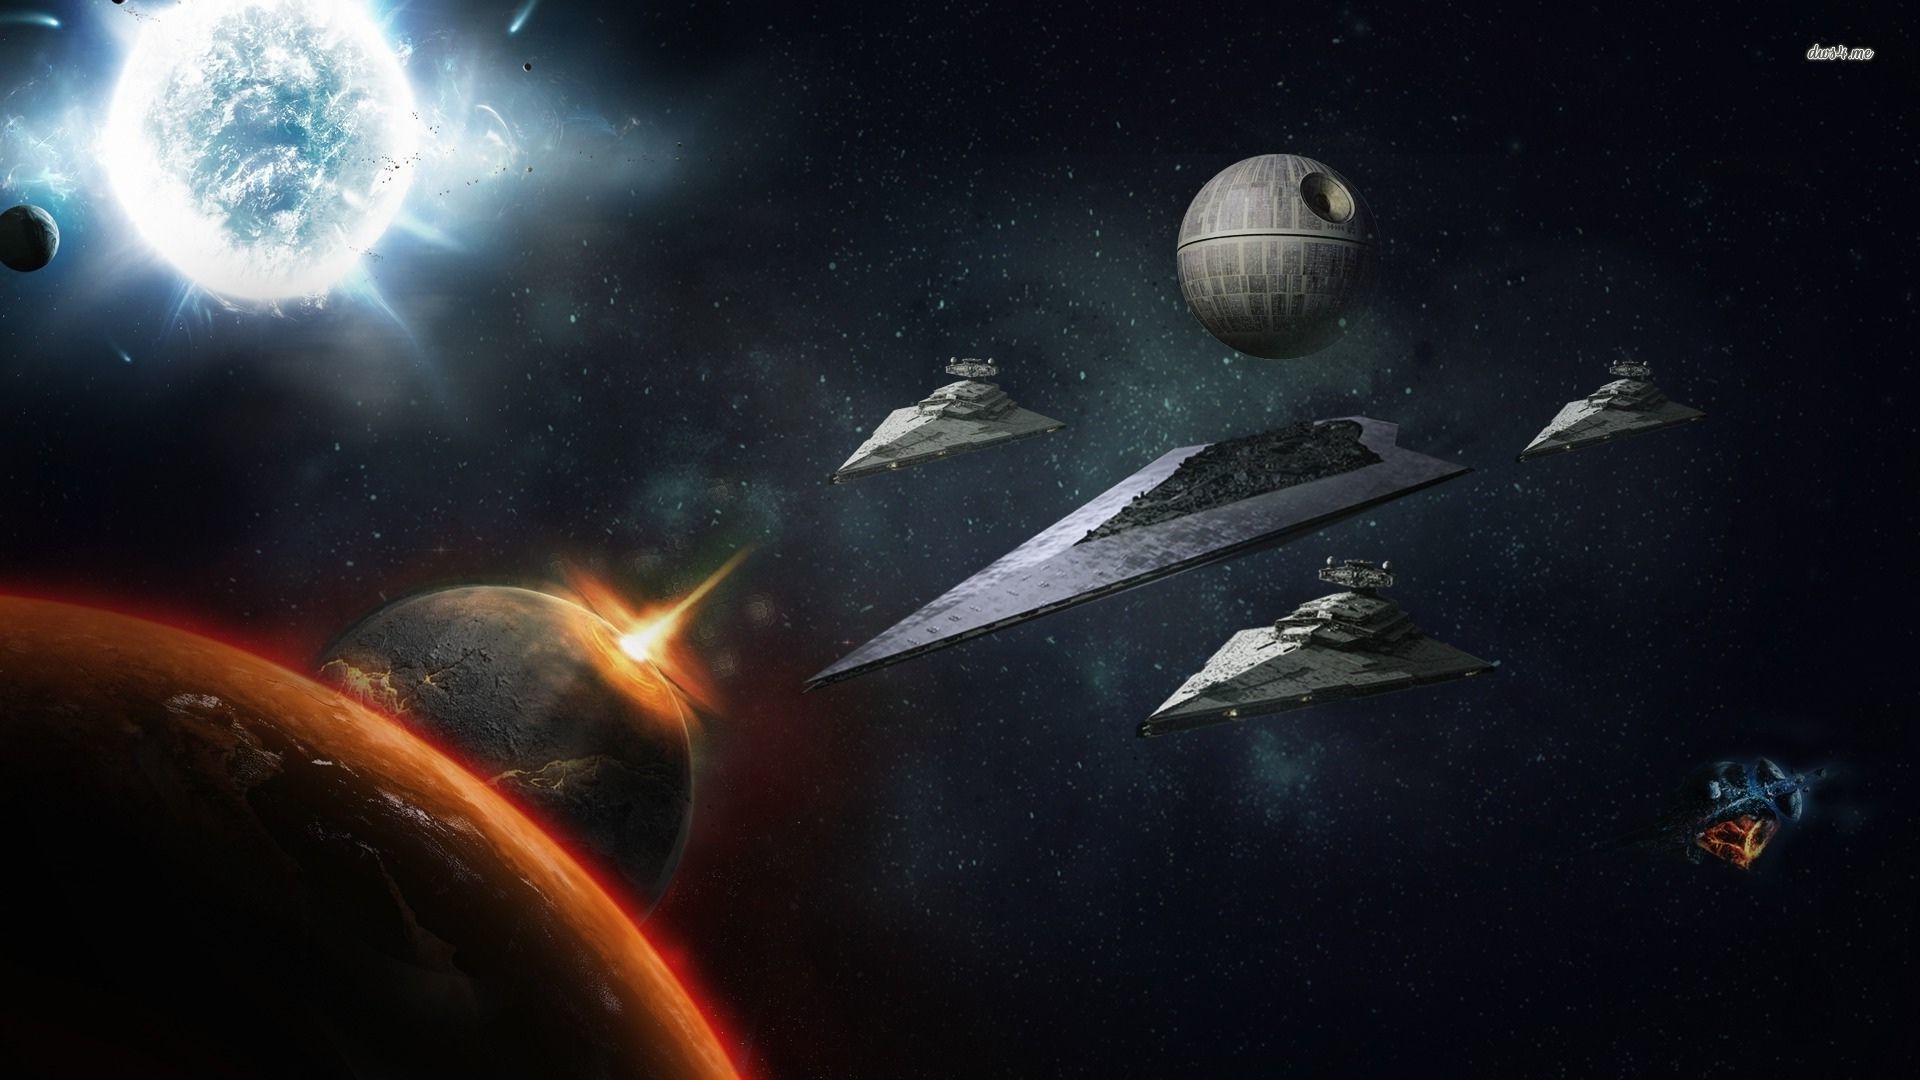 Death Star - Star Wars wallpaper - Movie wallpapers -